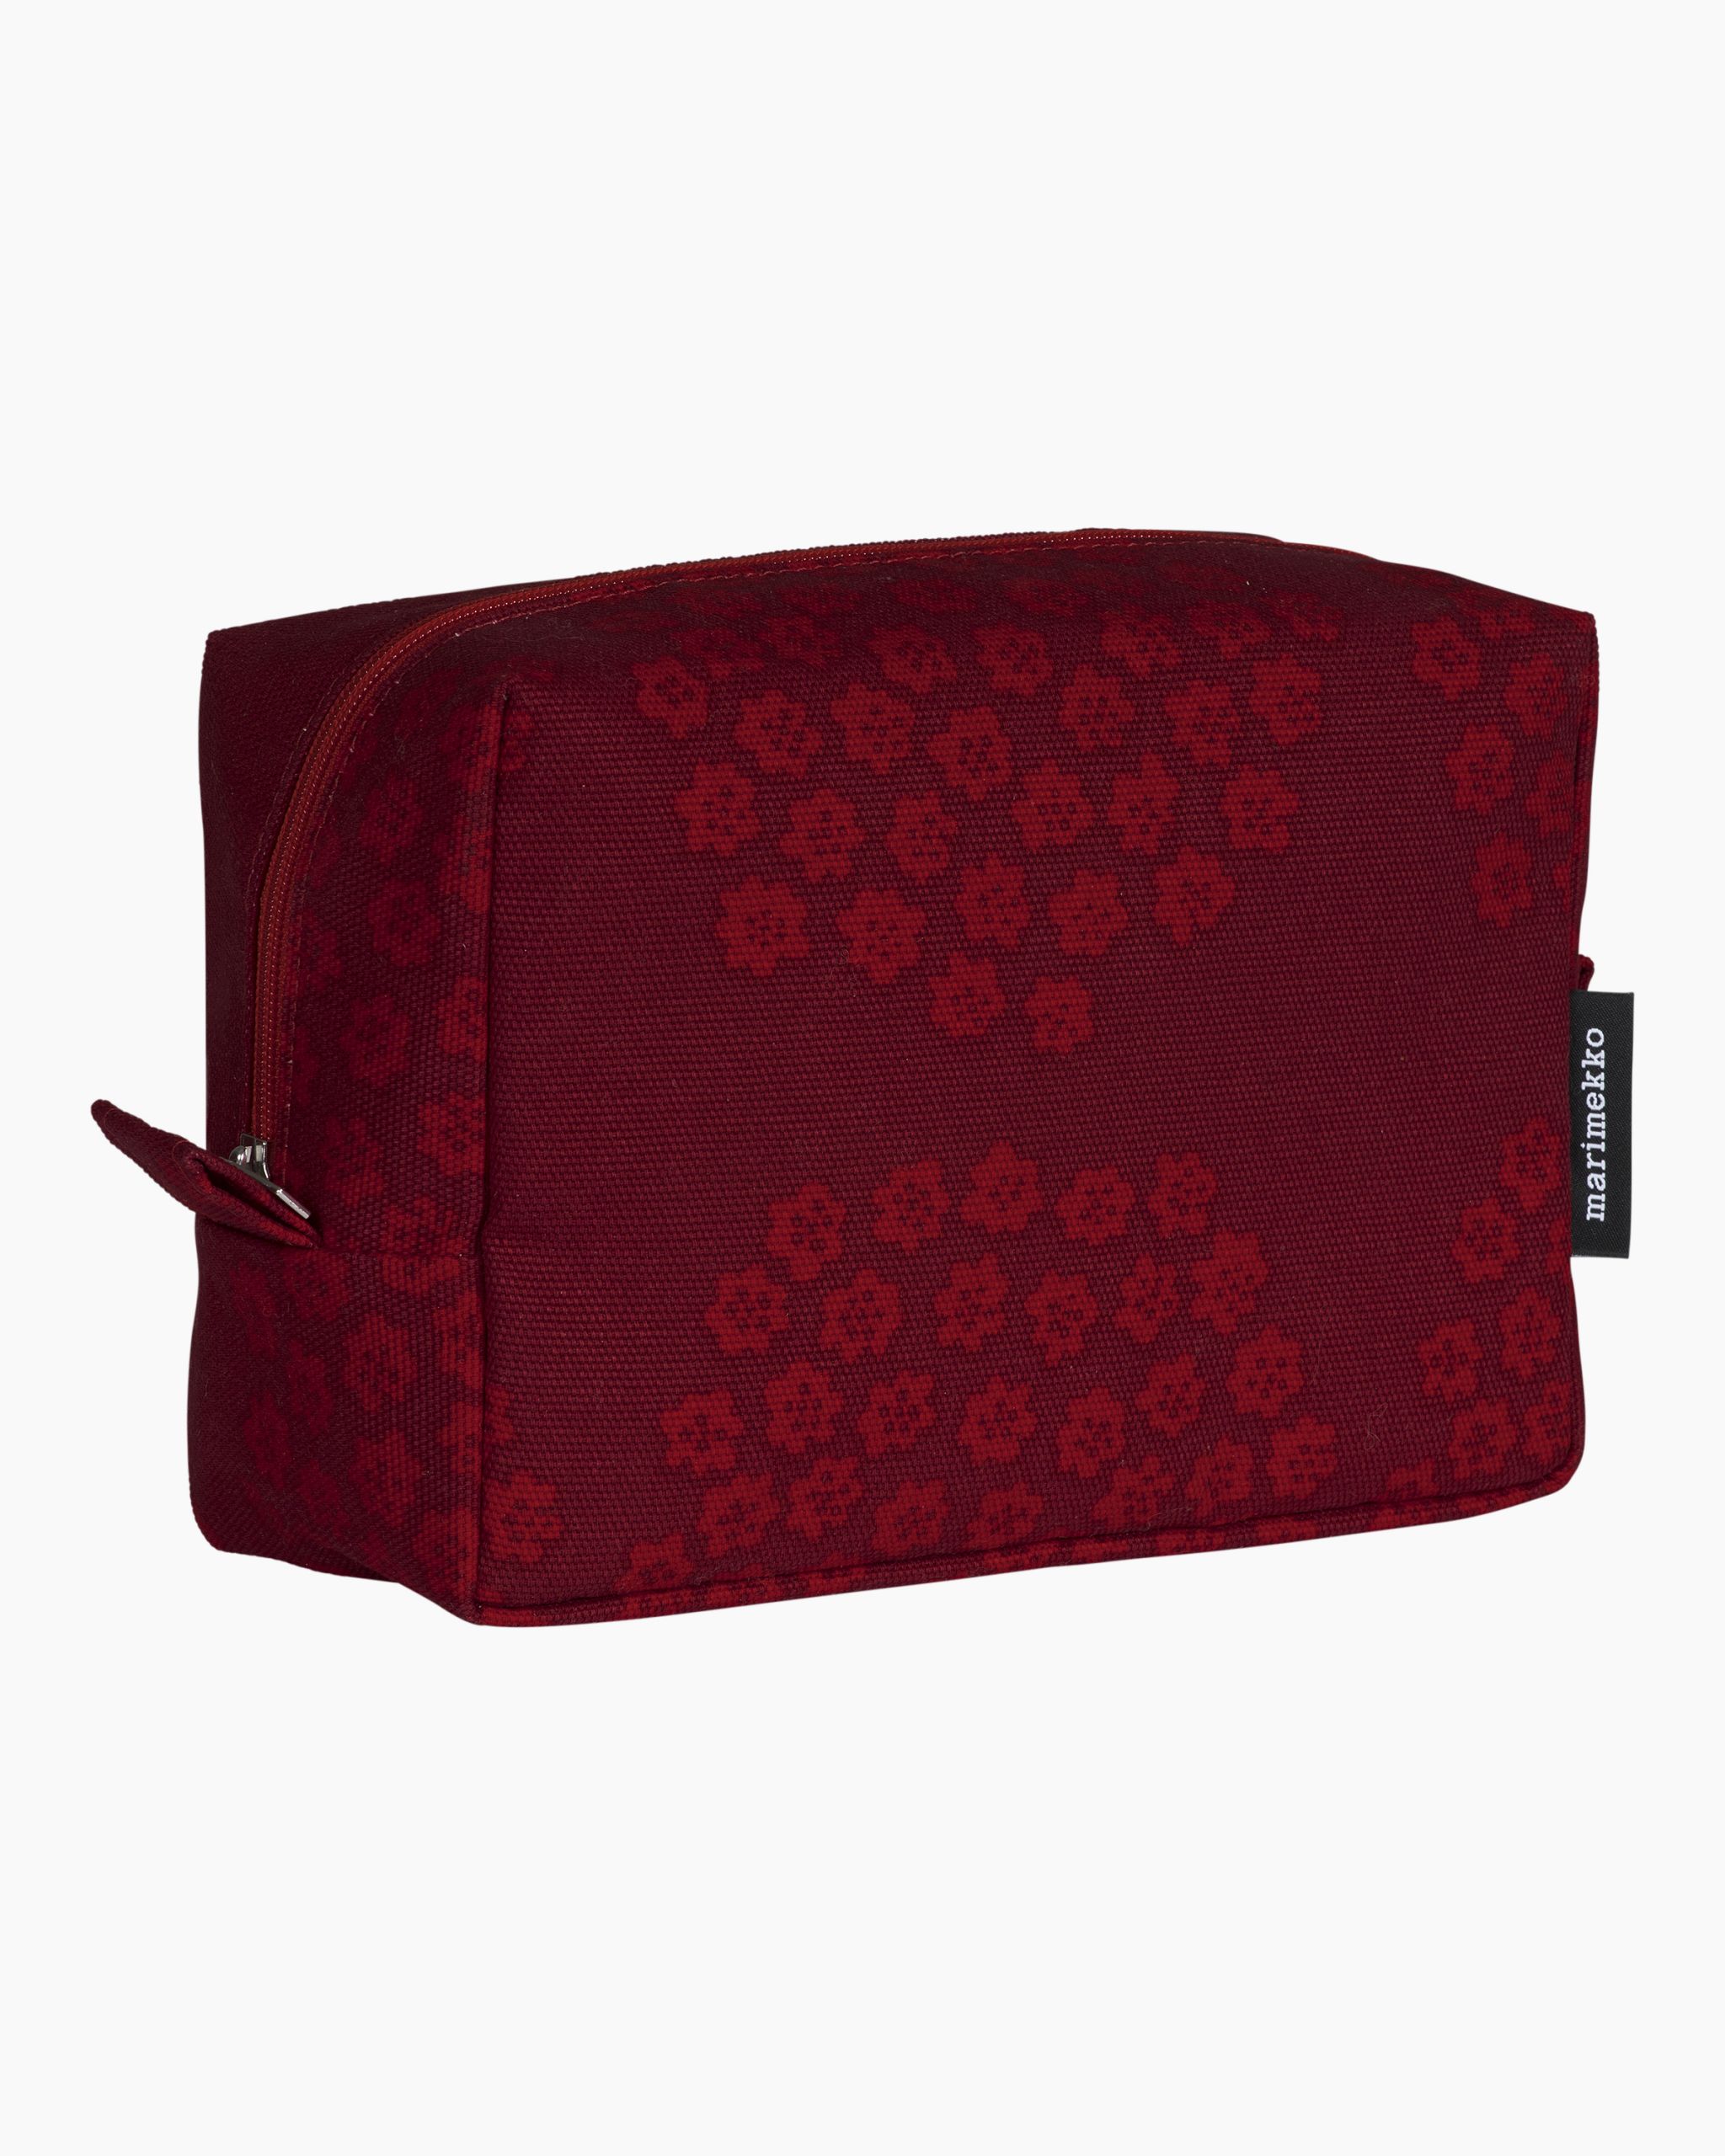 Vilja Puketti cosmetic bag dark red/red